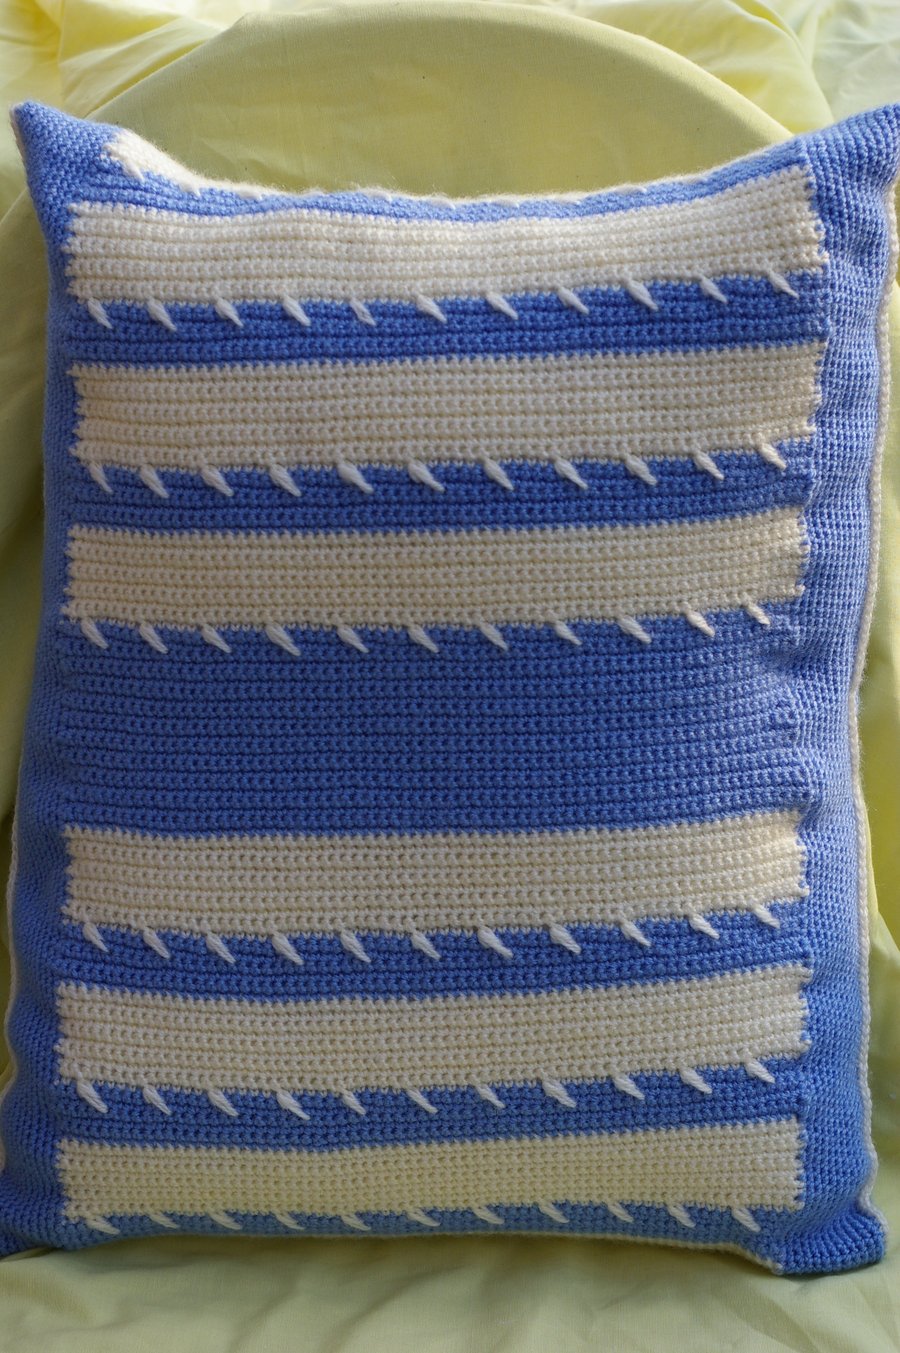 Cushion crochet blue and white